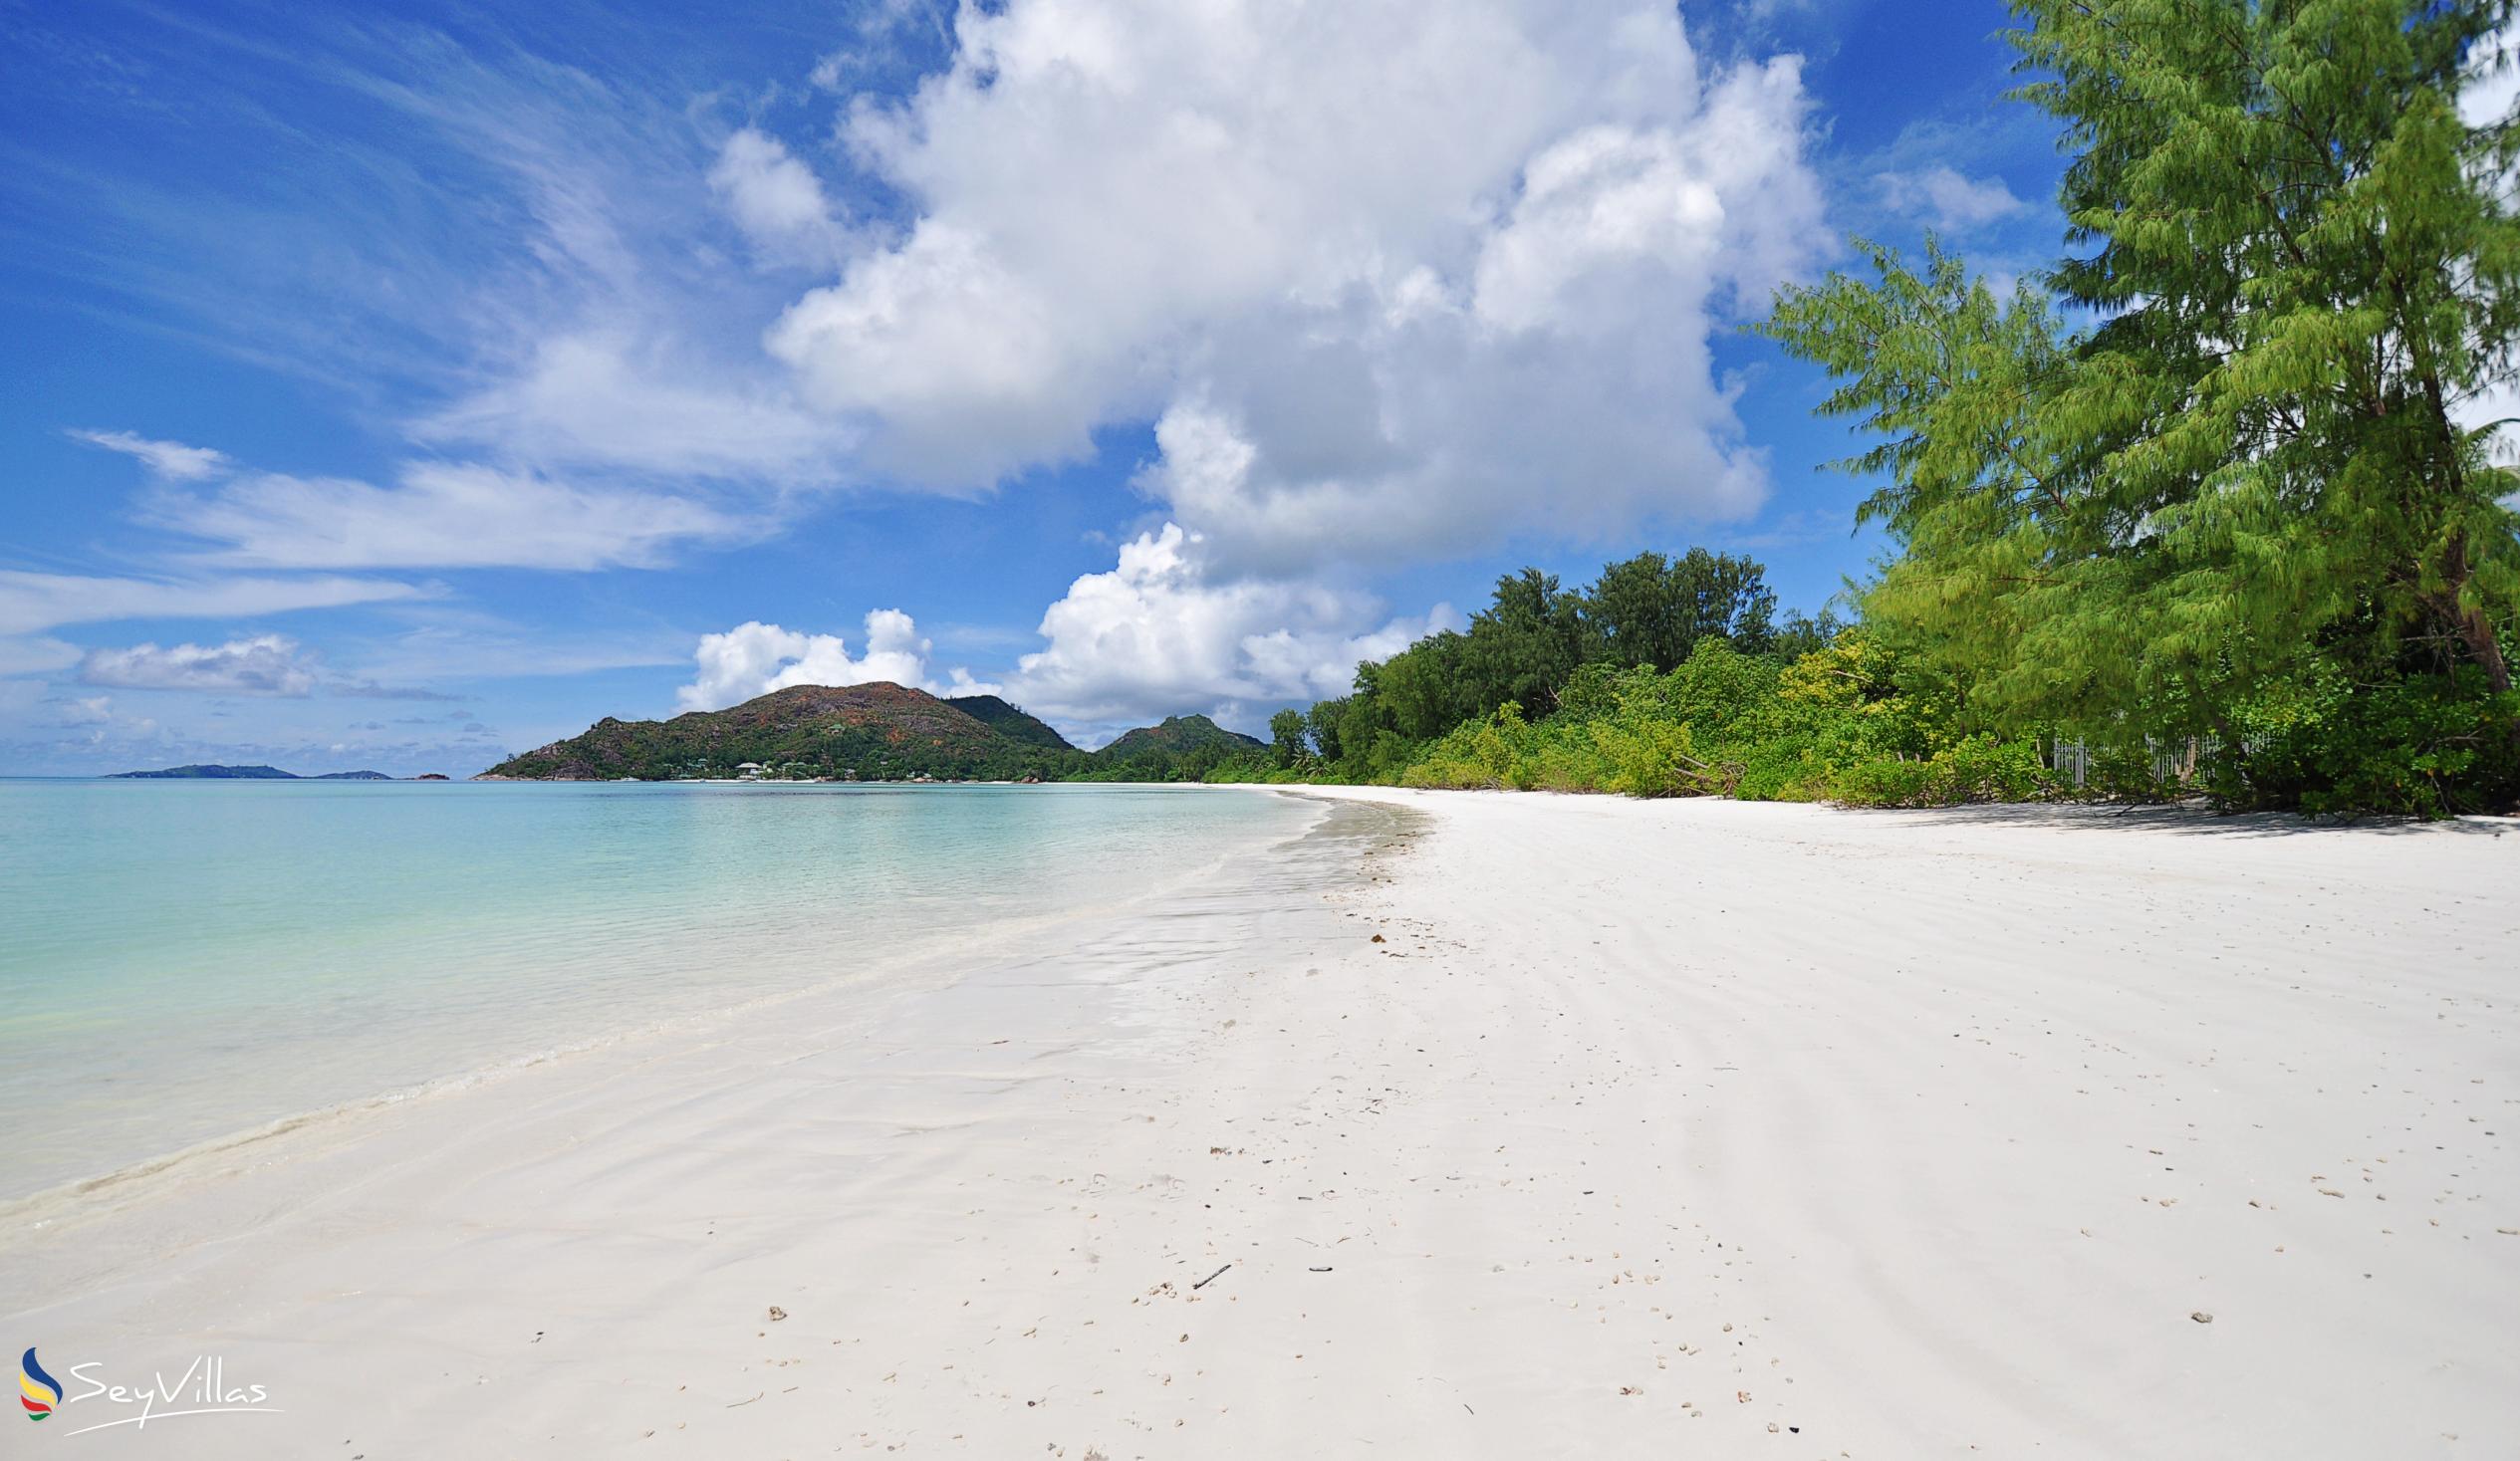 Photo 75: Cote d'Or Footprints - Beaches - Praslin (Seychelles)